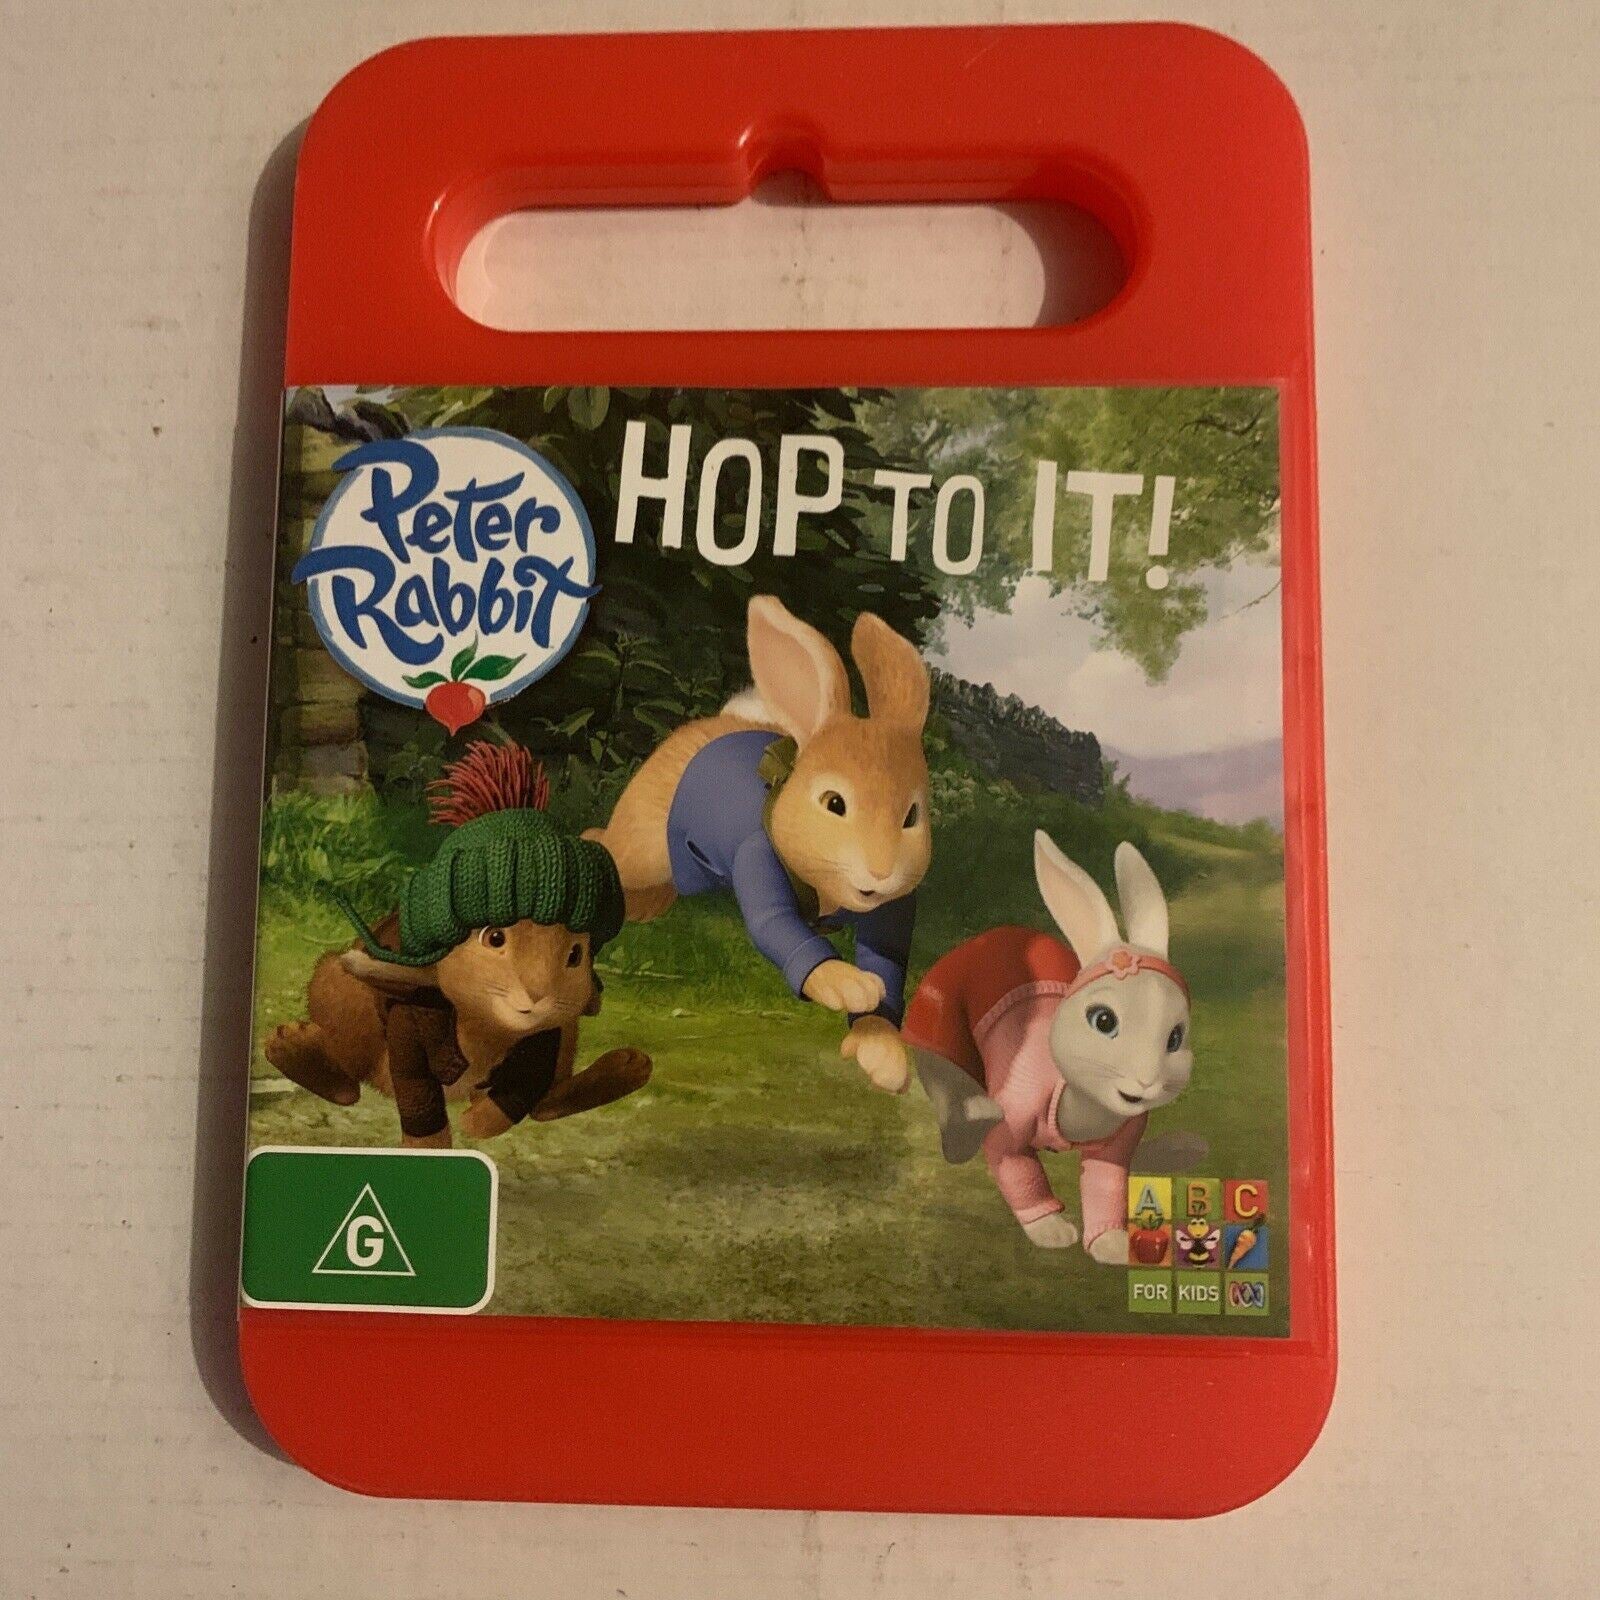 Peter Rabbit - Hop To It (DVD, 2013) All regions – Retro Unit